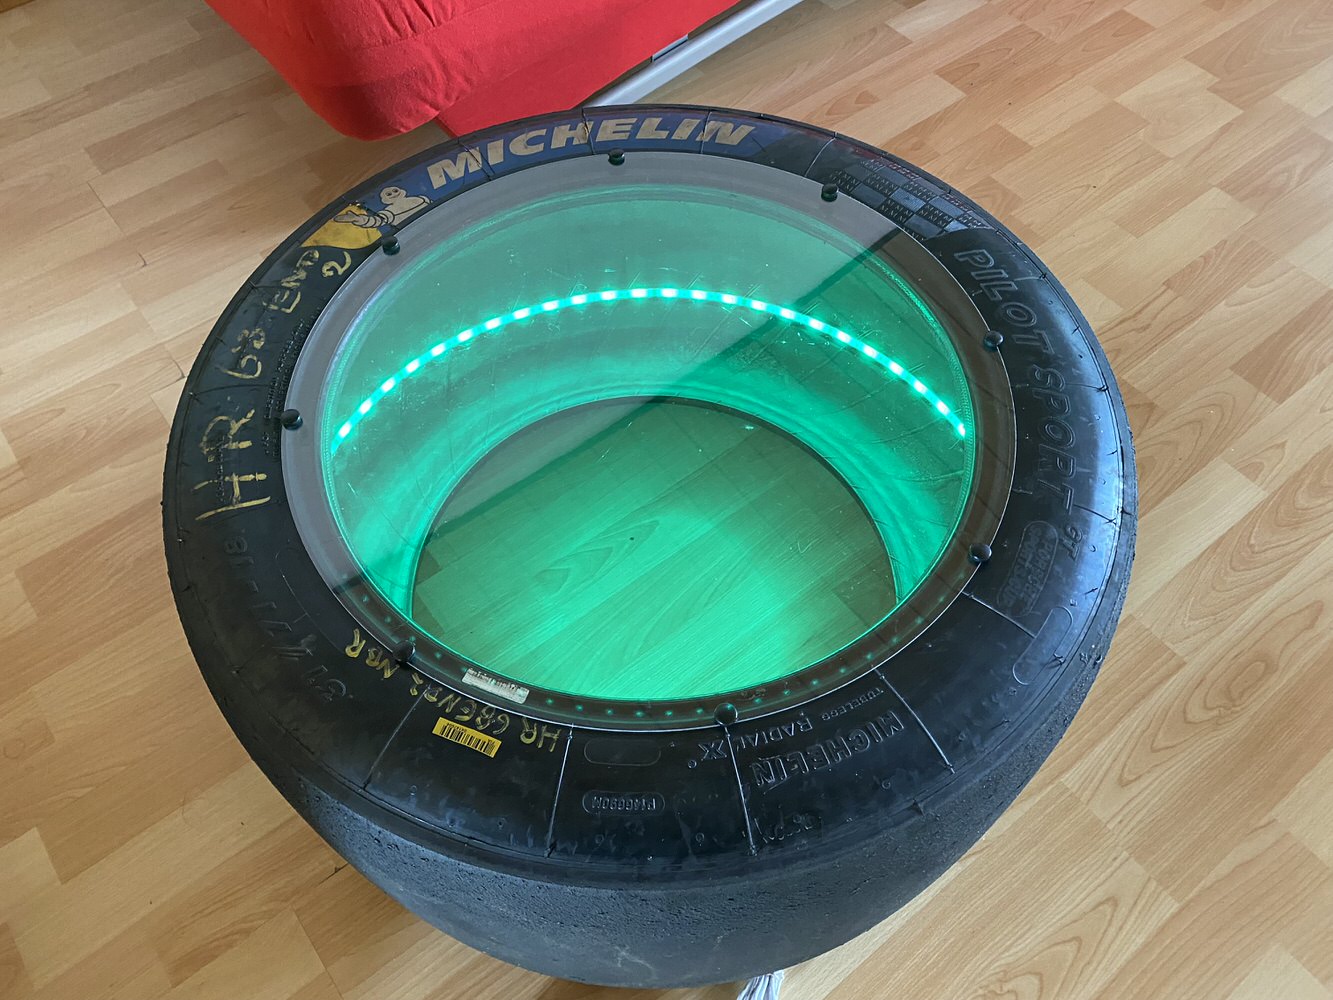 DTM, F 1 Racing-Slick Beistelltisch mit LED Beleuchtung u. klarer Tischplatte